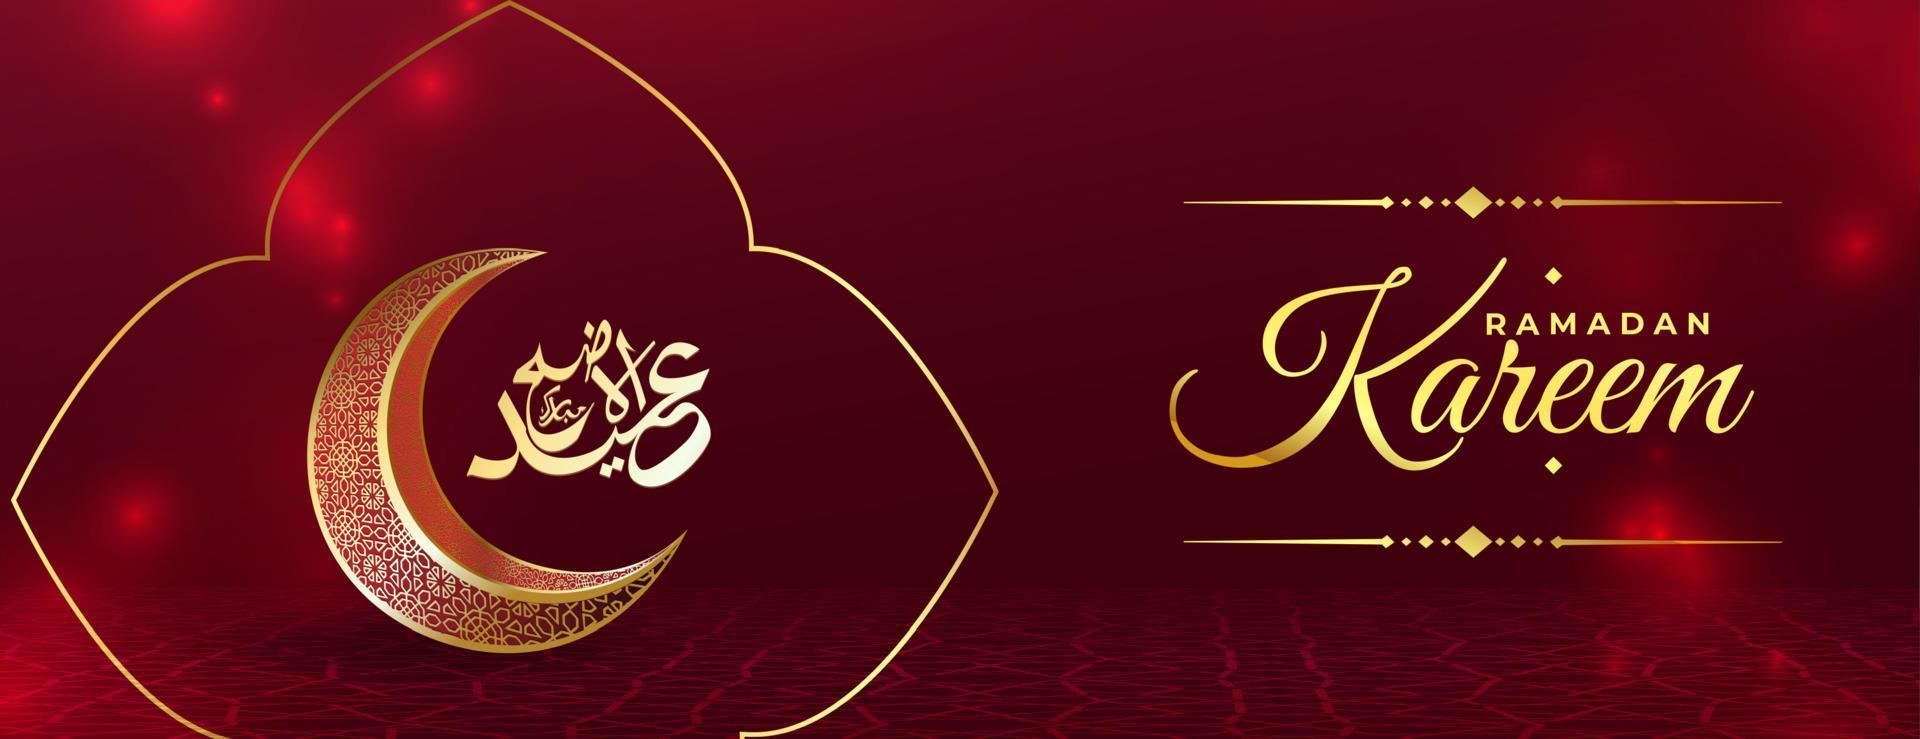 shiny red ramadan kareem golden background design template vector